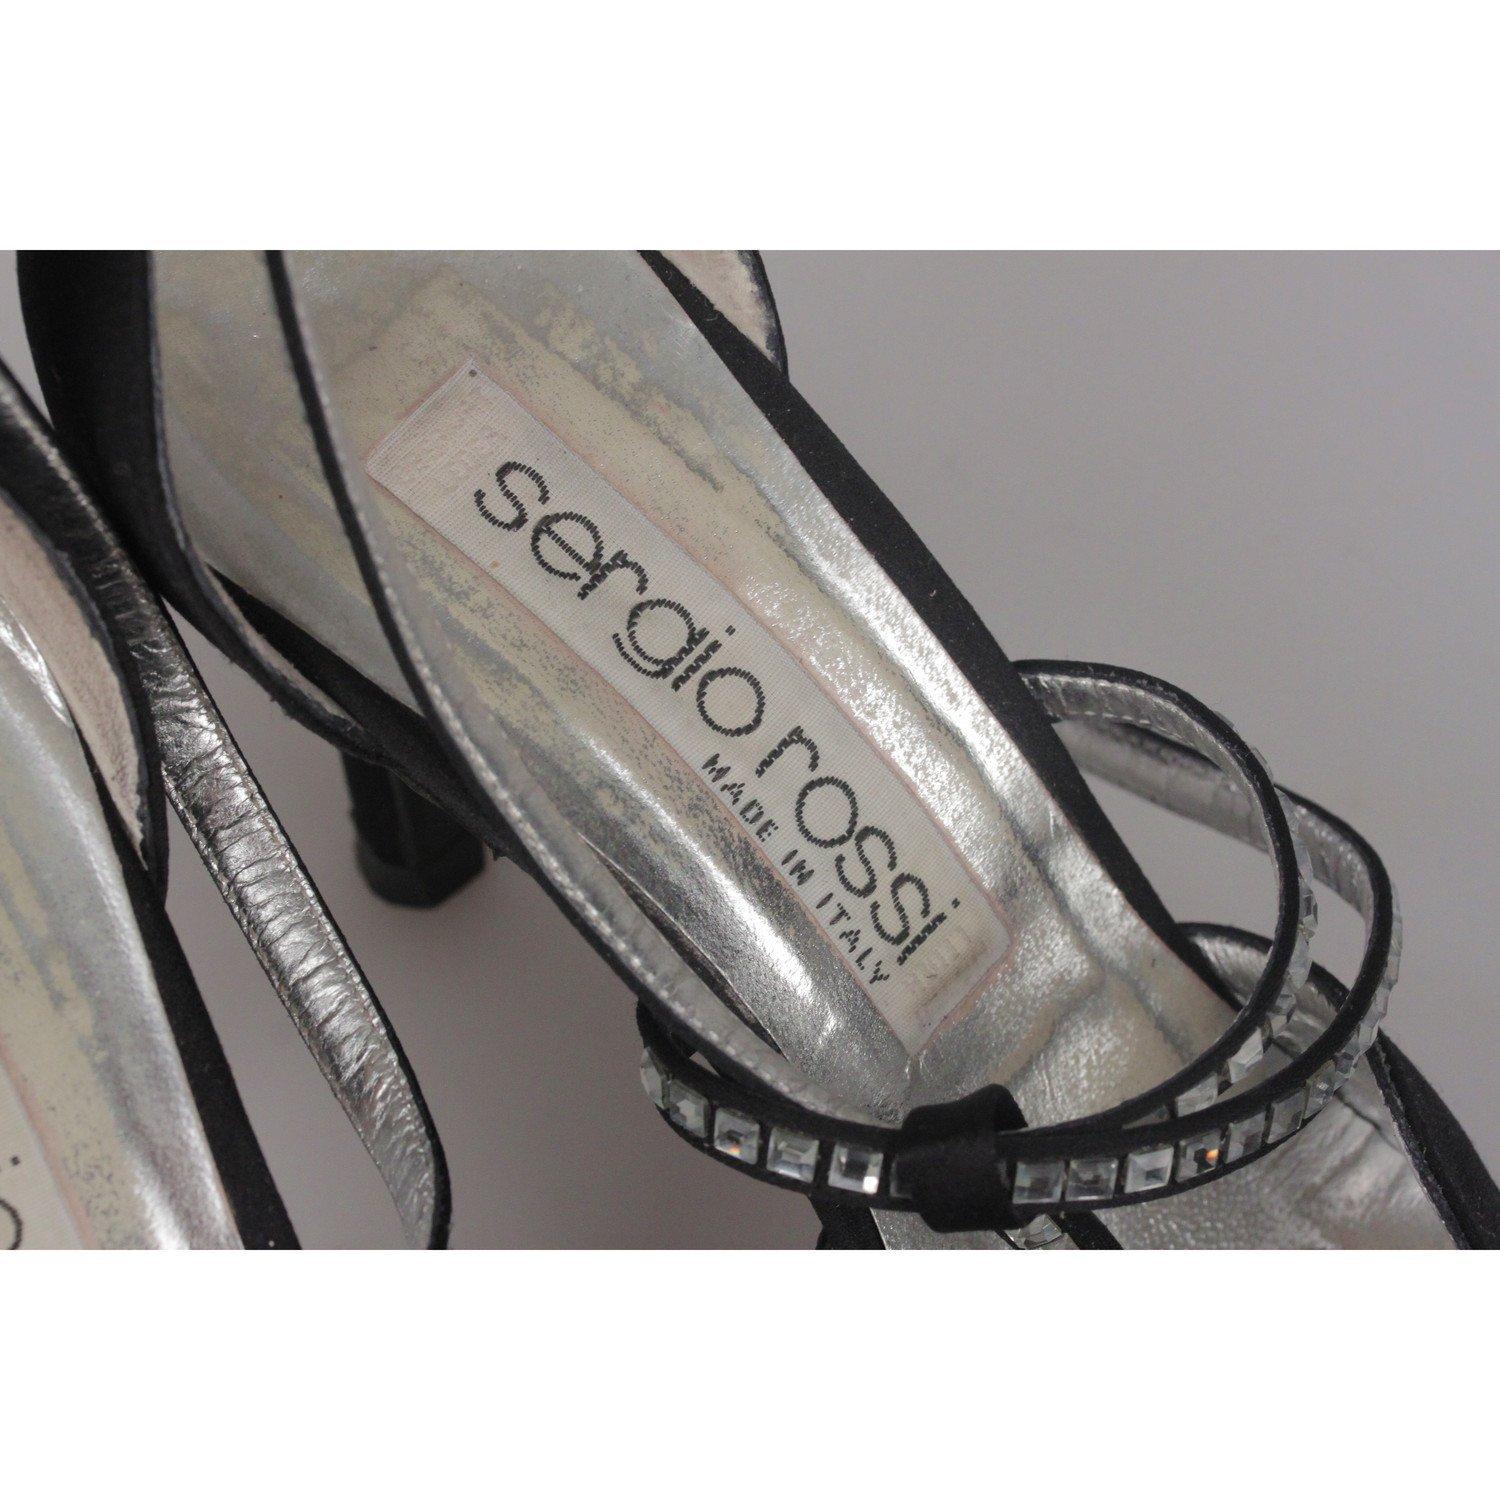 SERGIO ROSSI BlackFabric D'Orsay Shoes HEELS PUMPS with Crystals 36 IT 3